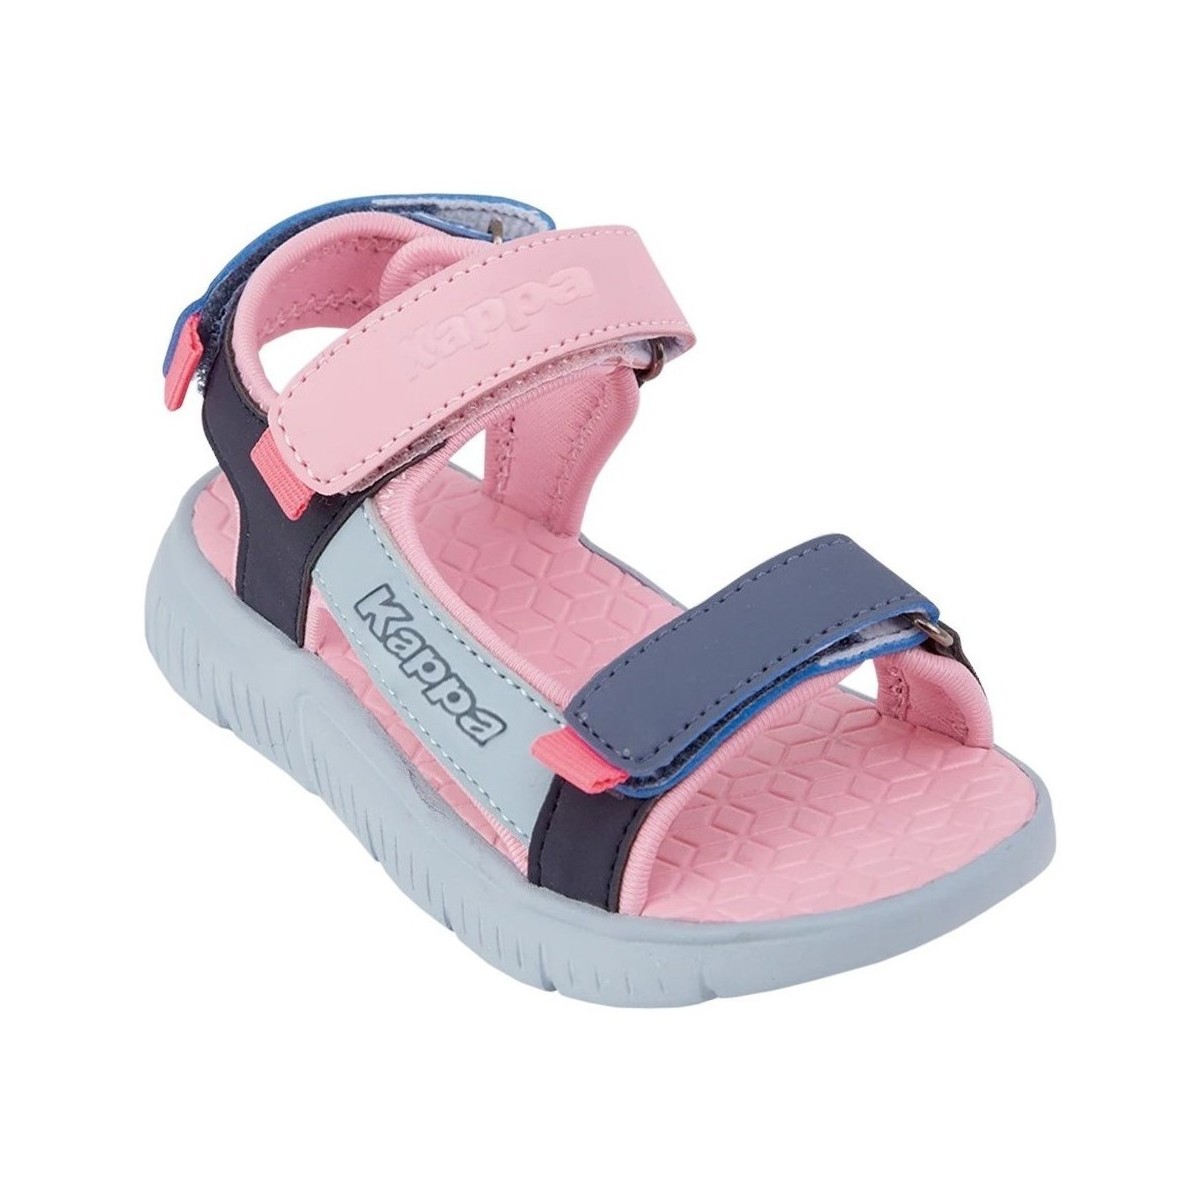 Schuhe Kinder Sandalen / Sandaletten Kappa Kana MF Blau, Rosa